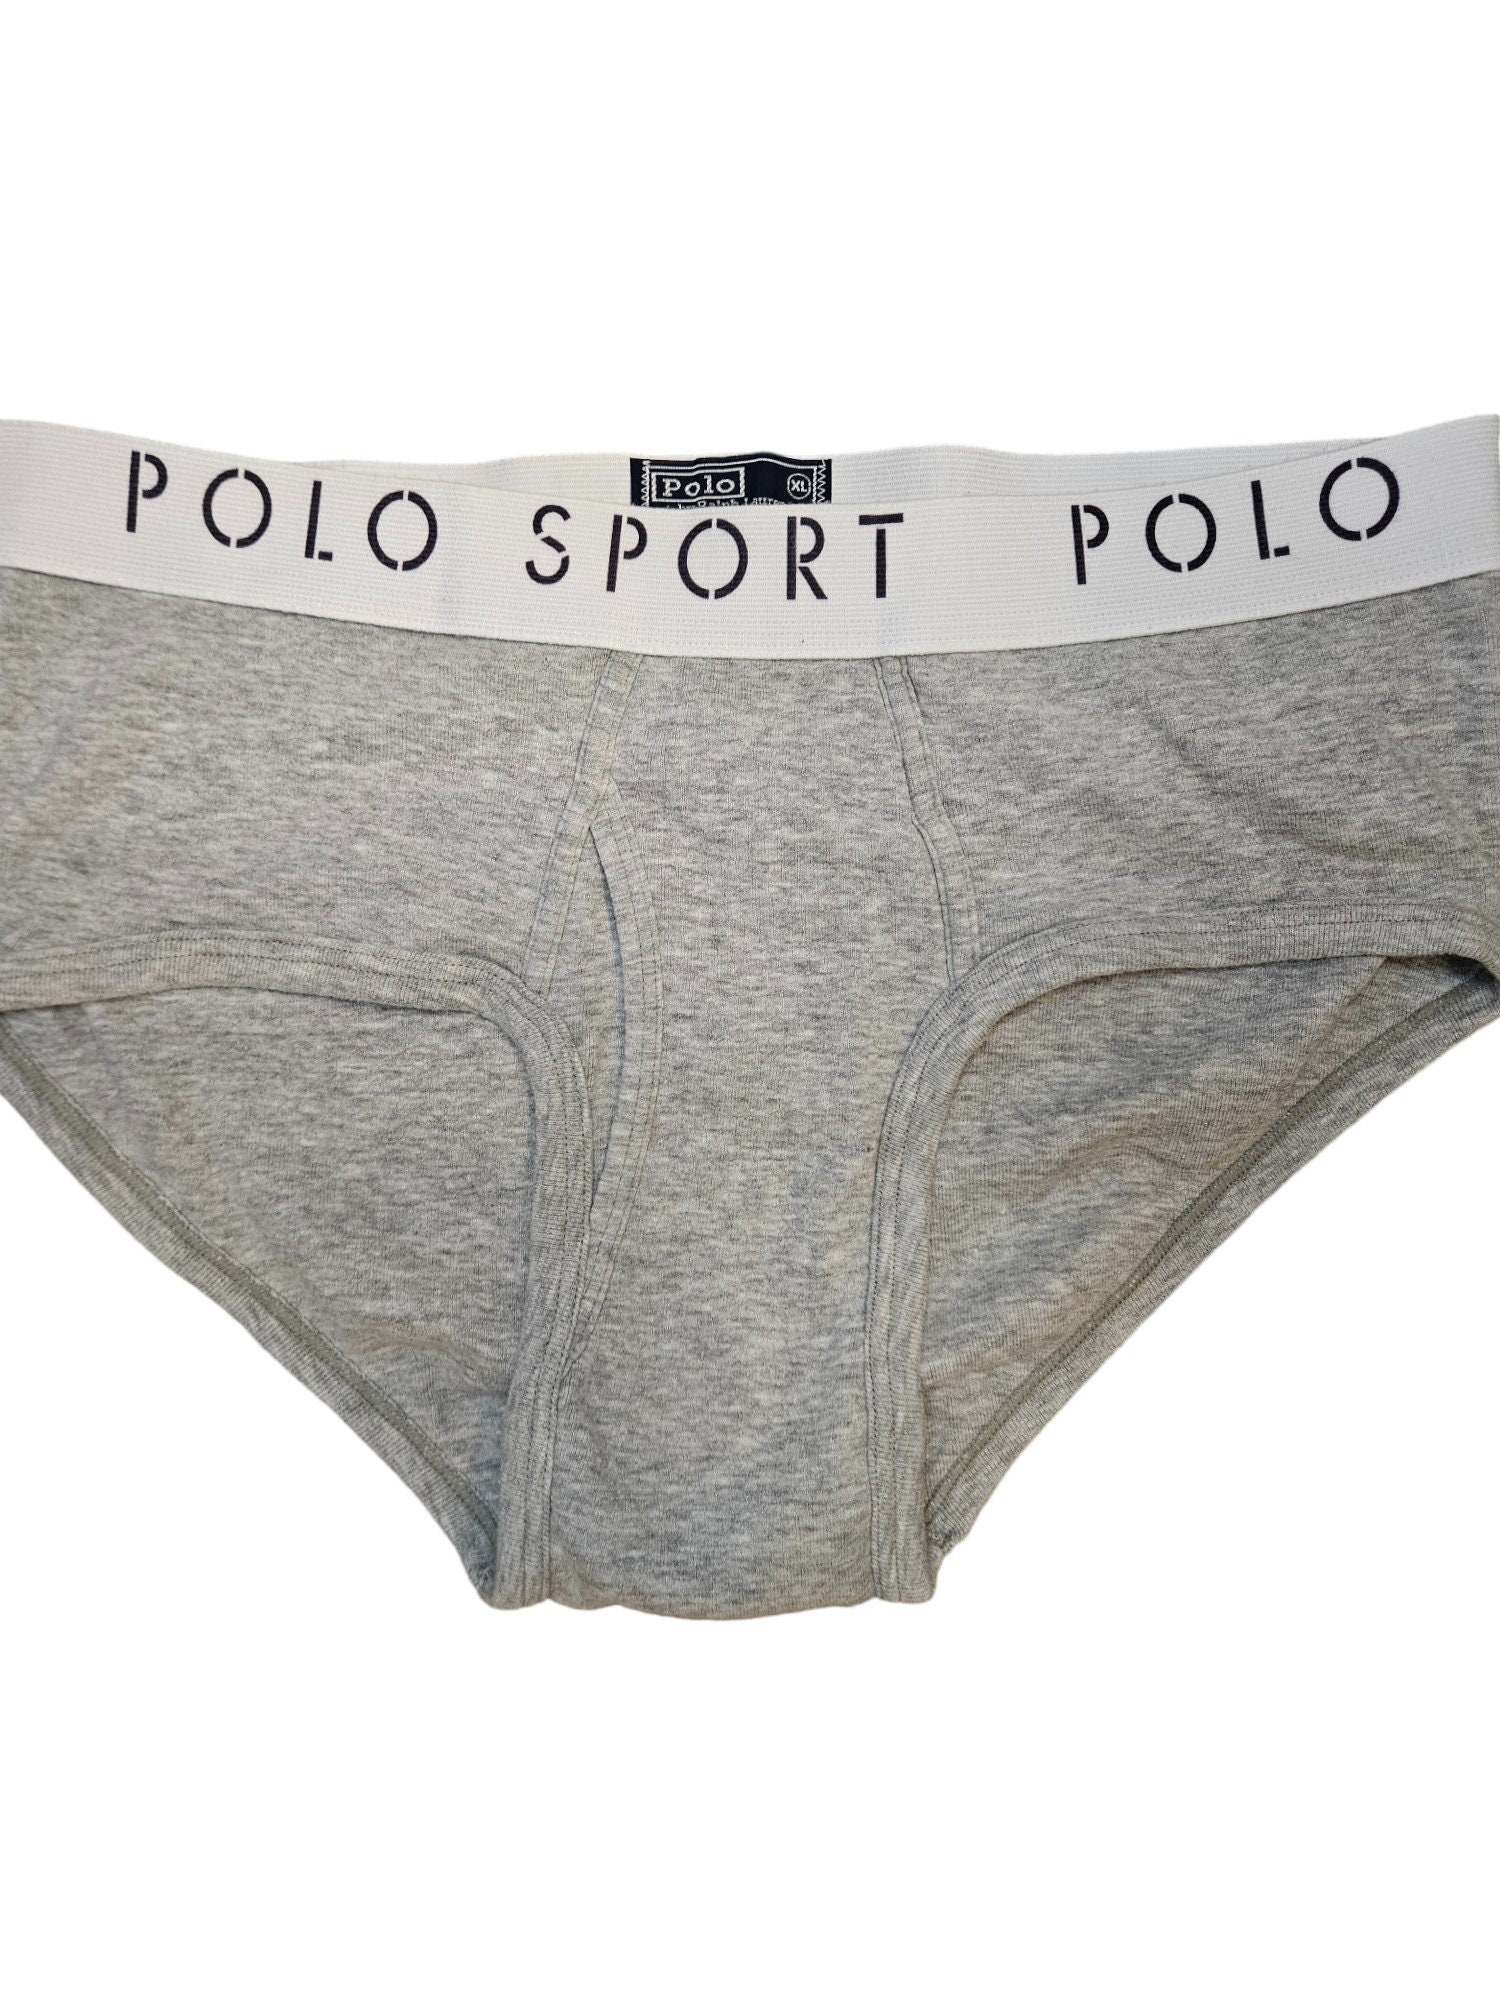 Vintage Polo Ralph Lauren Underwear Briefs Multiple Sizes Available NEVER  WORN 